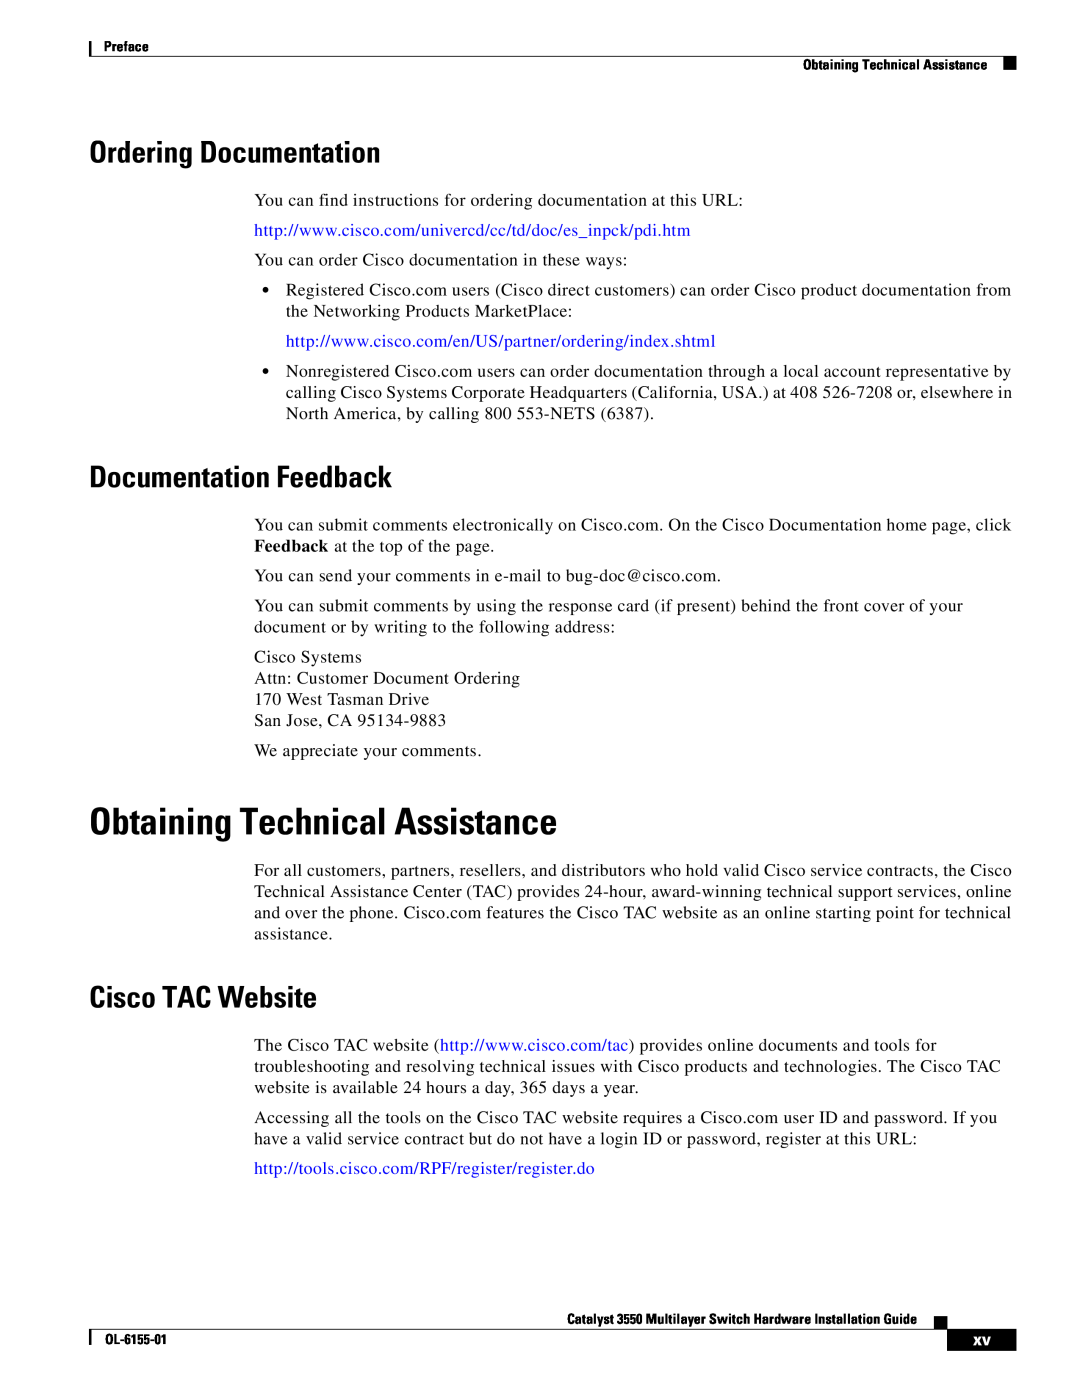 Cisco Systems 3550 manual Obtaining Technical Assistance, Ordering Documentation, Documentation Feedback, Cisco TAC Website 